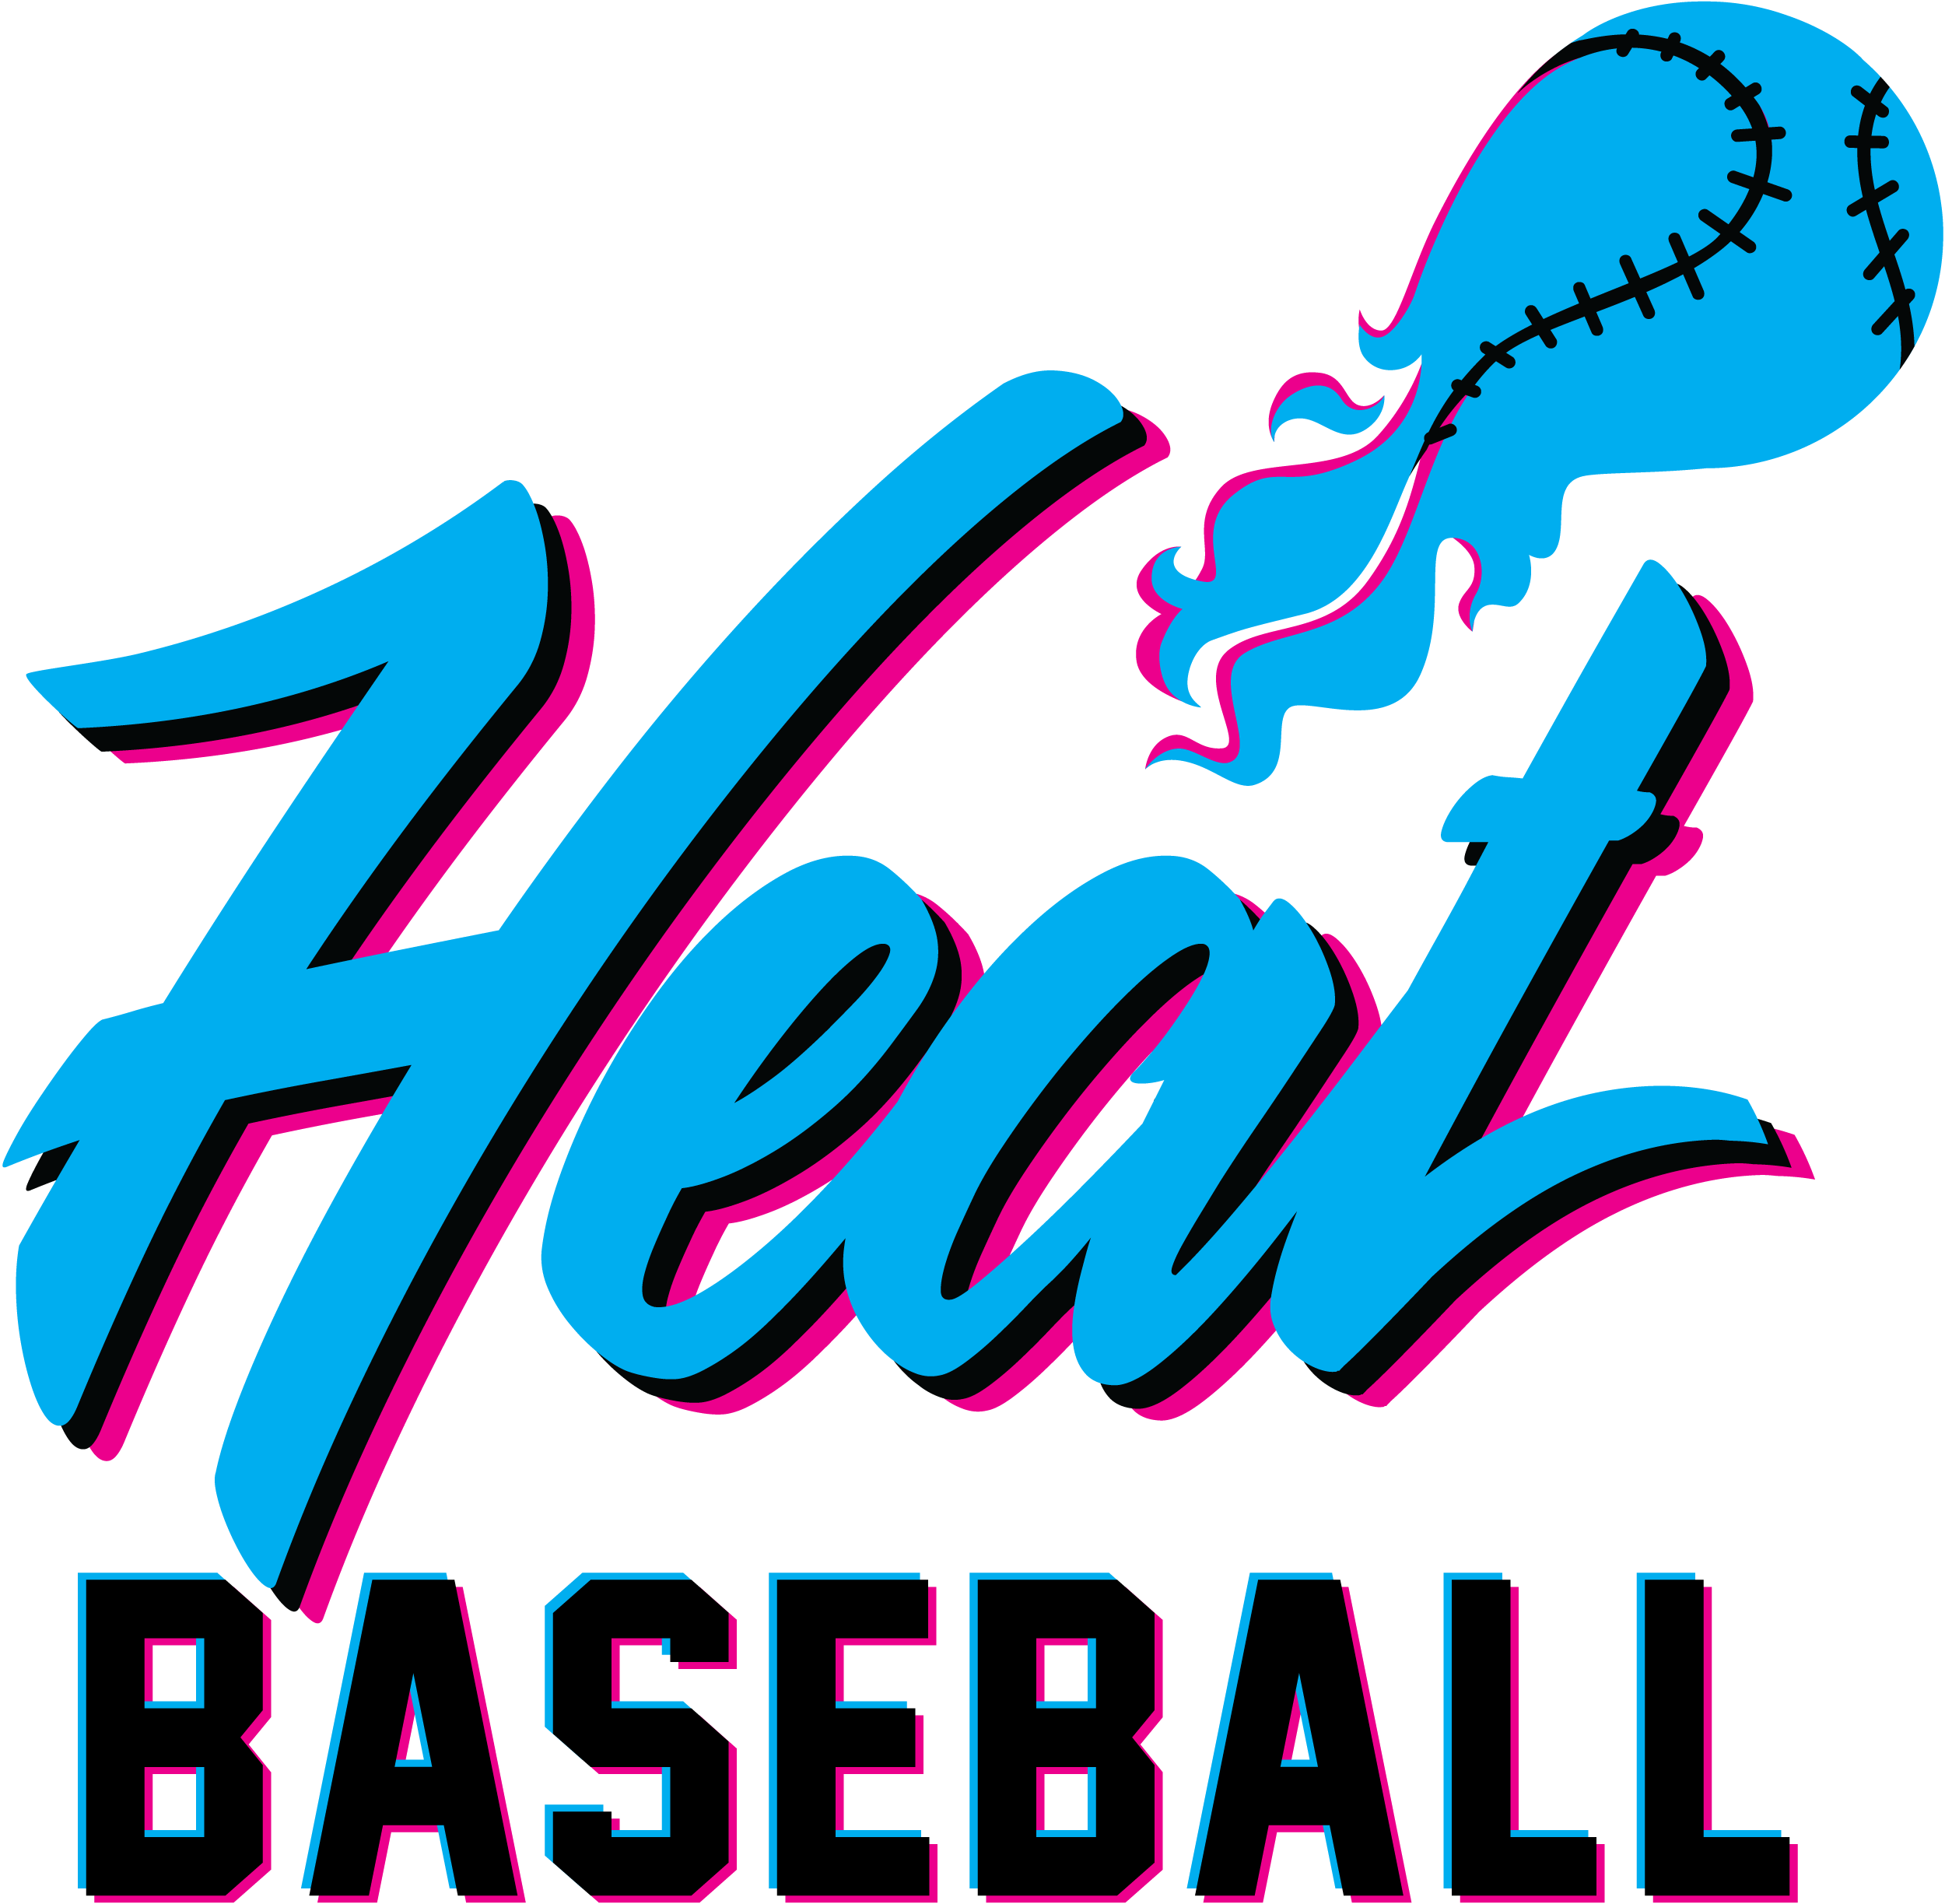 Heat Baseball – The Logo Store